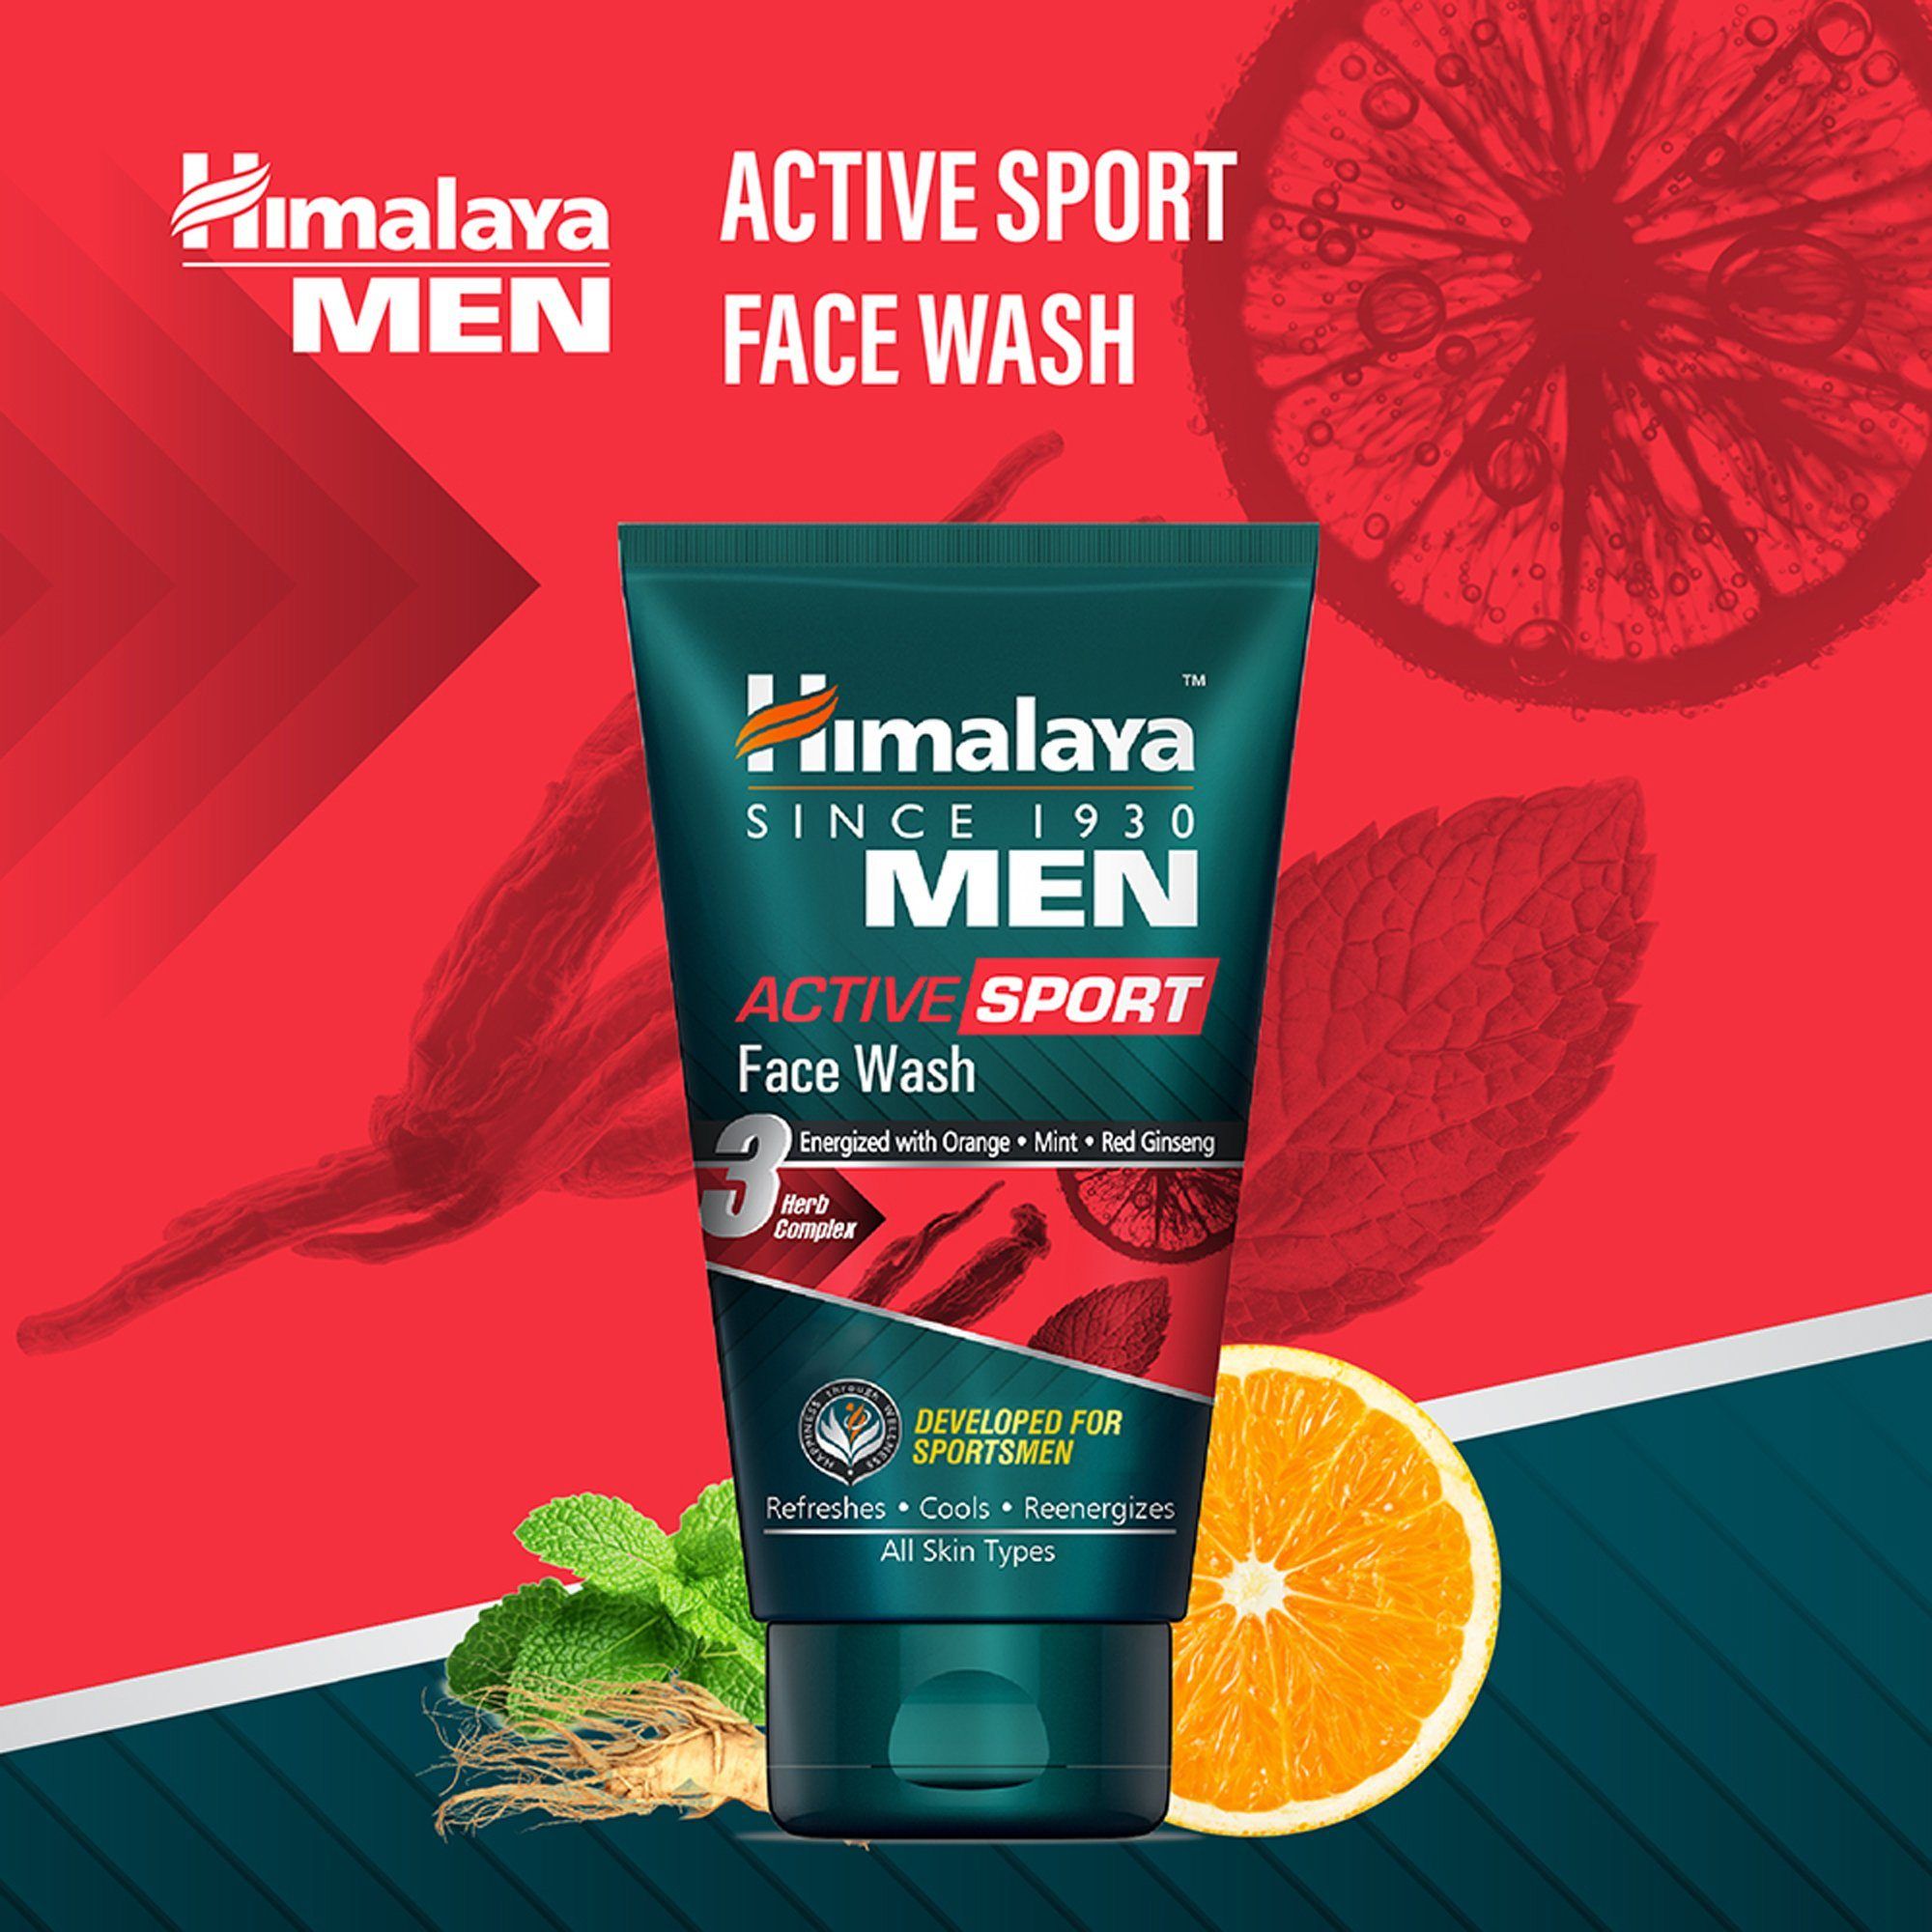 Himalaya MEN ACTIVE SPORT Face Wash - Face wash for men